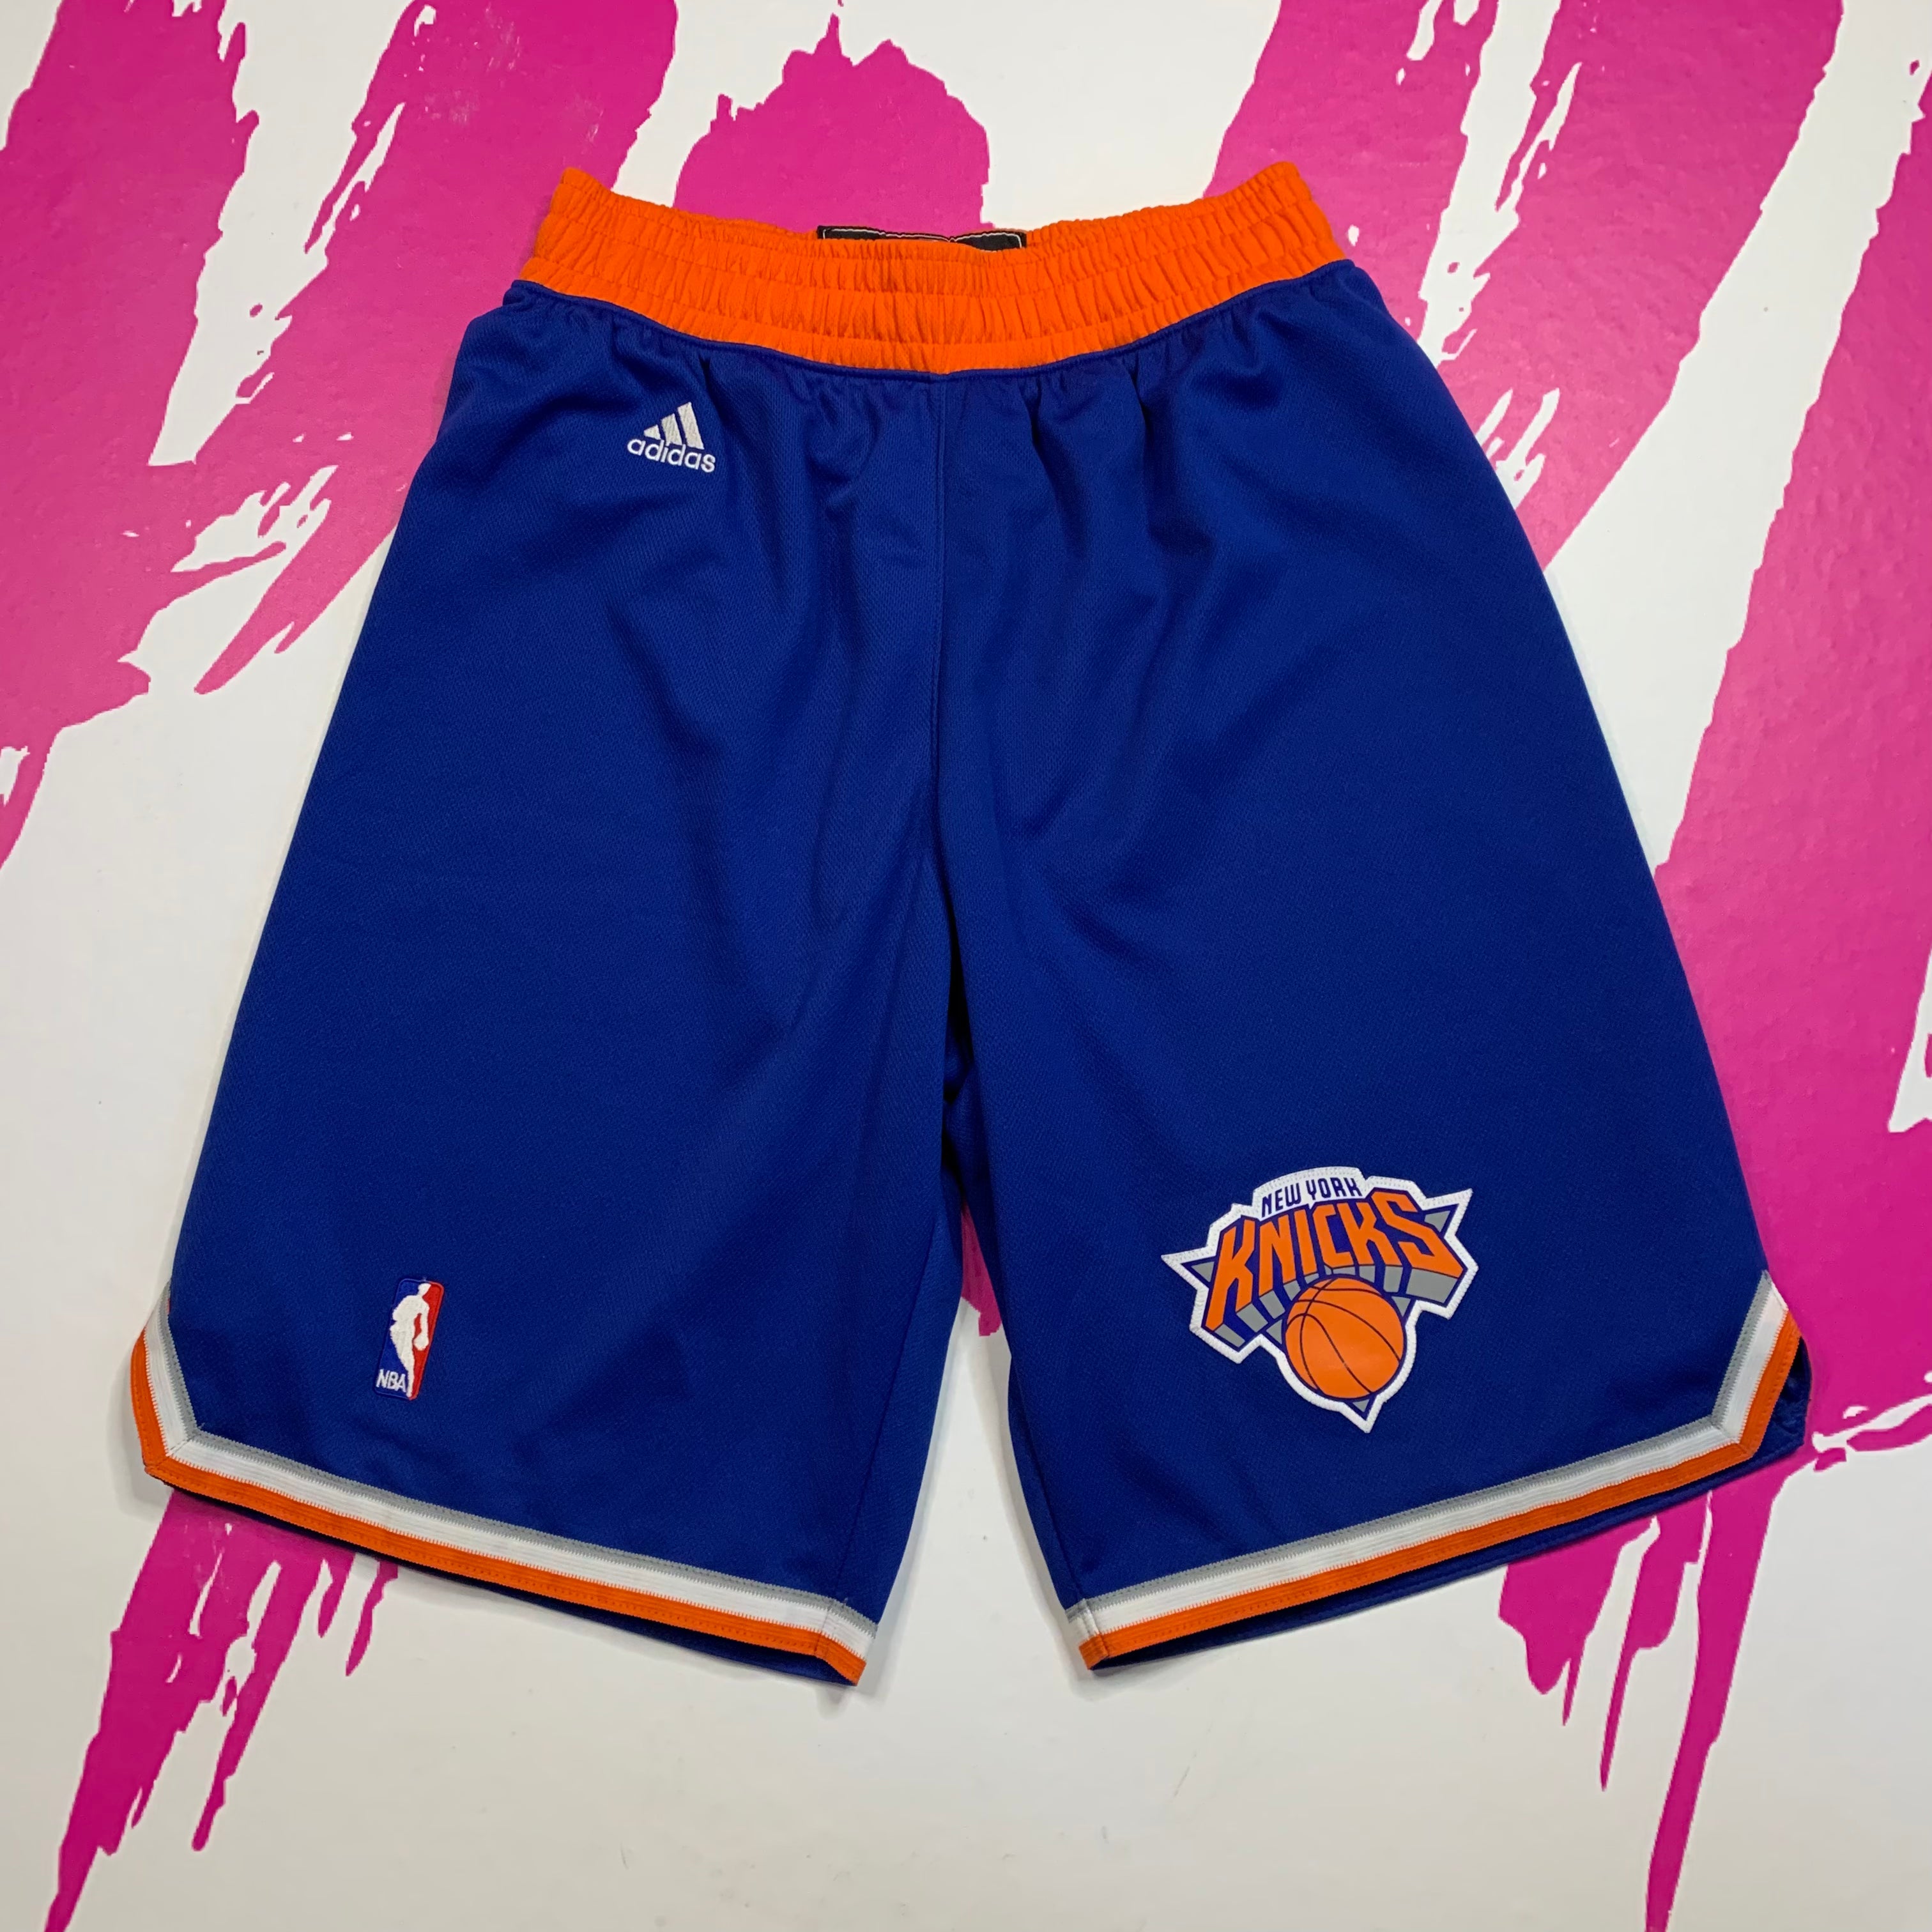 New York Knicks NBA Basketball Shorts, Made by Adidas Trefoil